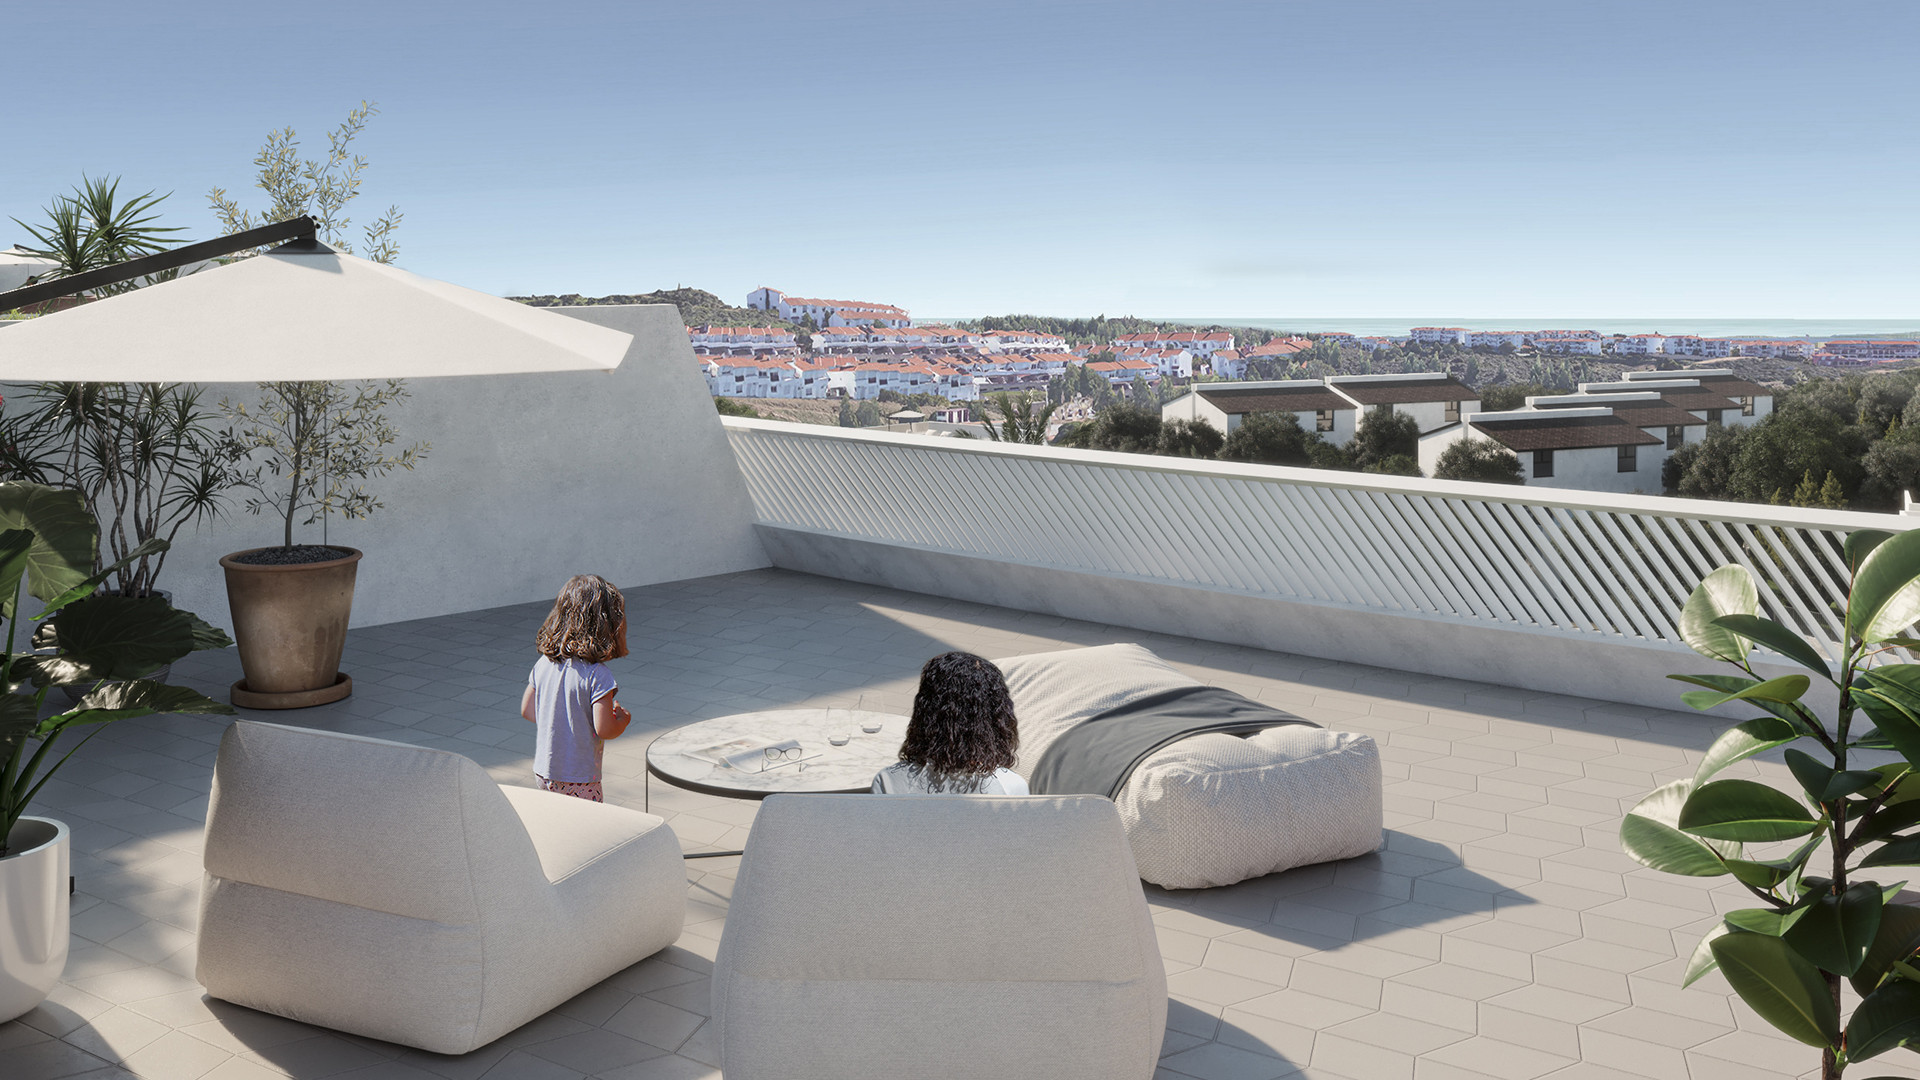 Brand new 119m2 flat with three bedrooms located in the area of La Cala de Mijas.